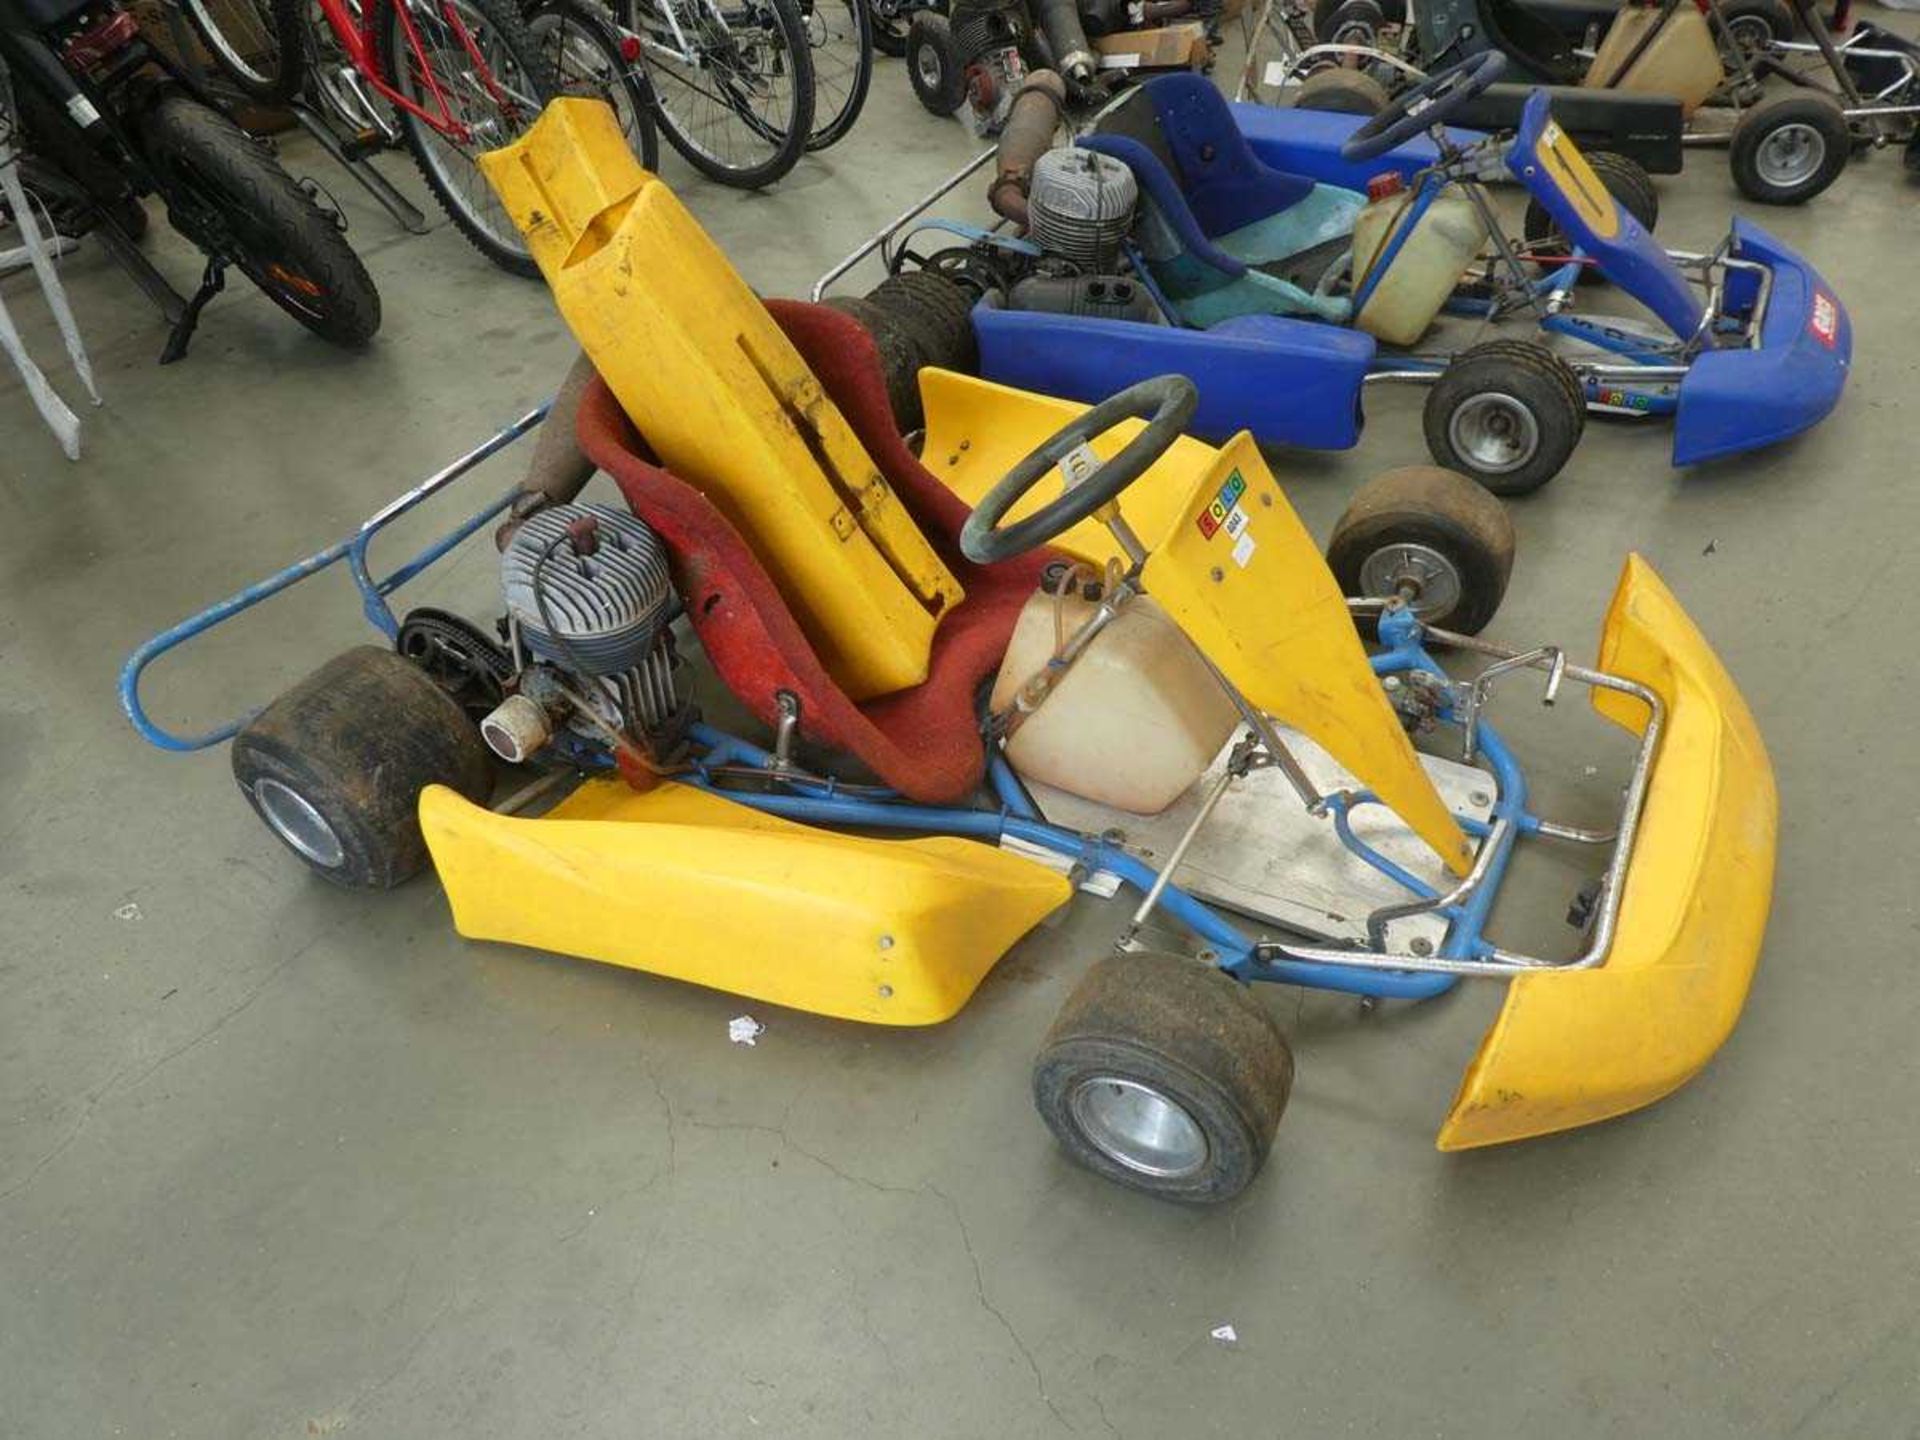 Yellow petrol powered Go kart